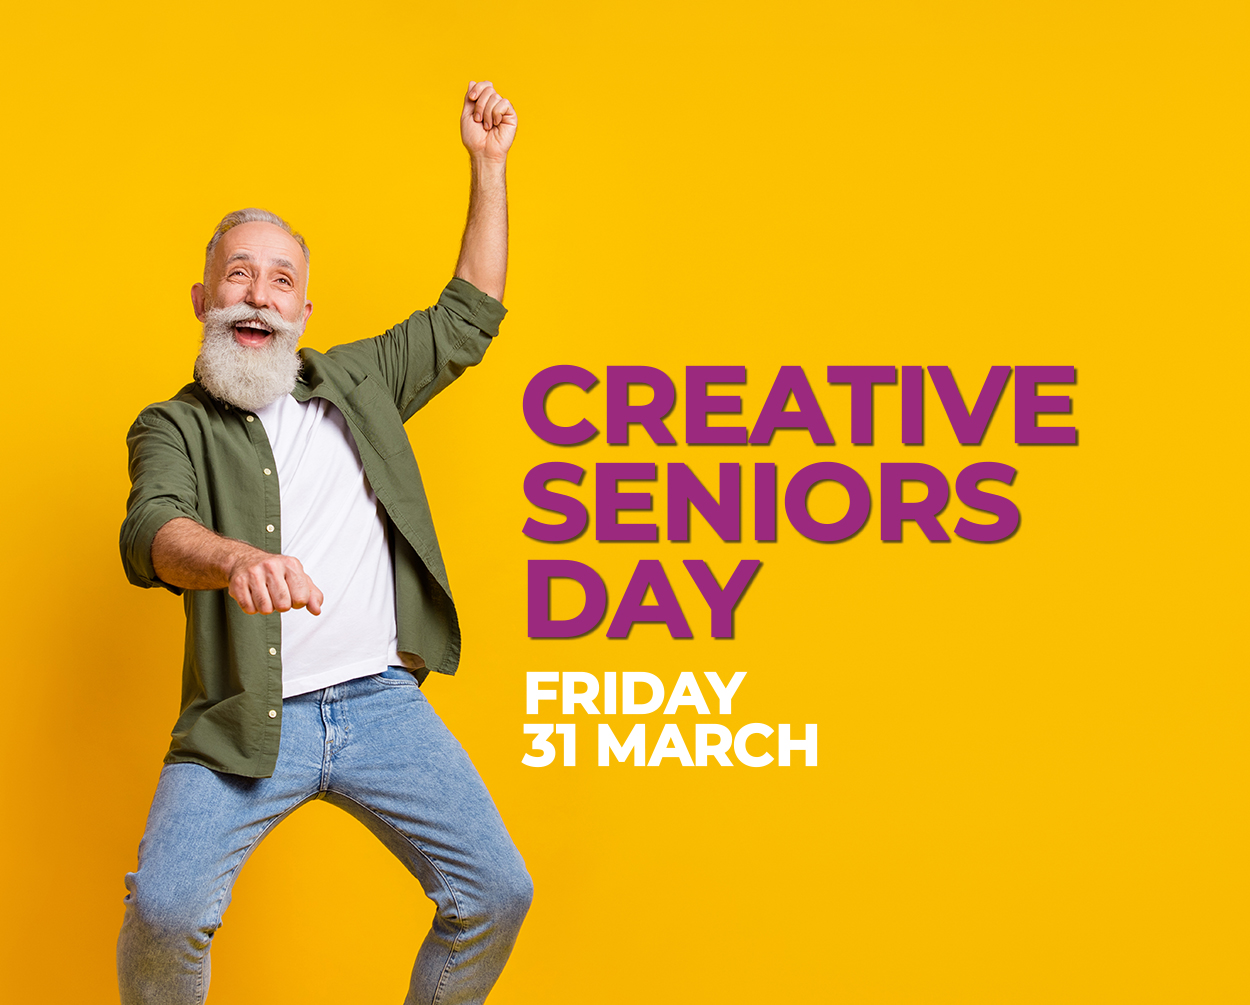 Creative Seniors Day event poster